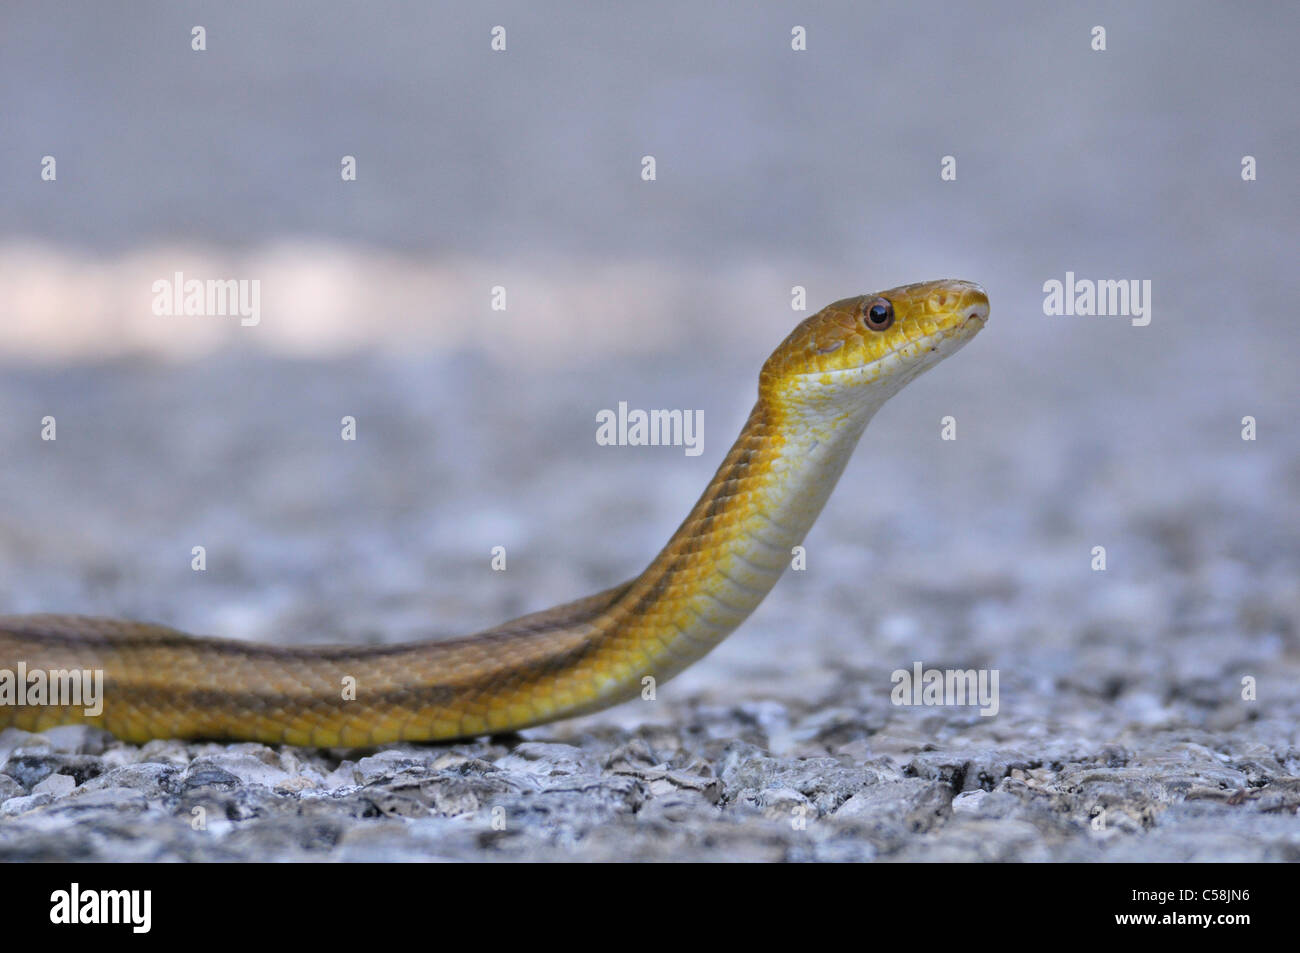 Amarillo Ratsnake, serpiente, J. N. Ding Darling, National Wildlife Refuge, Foto de stock